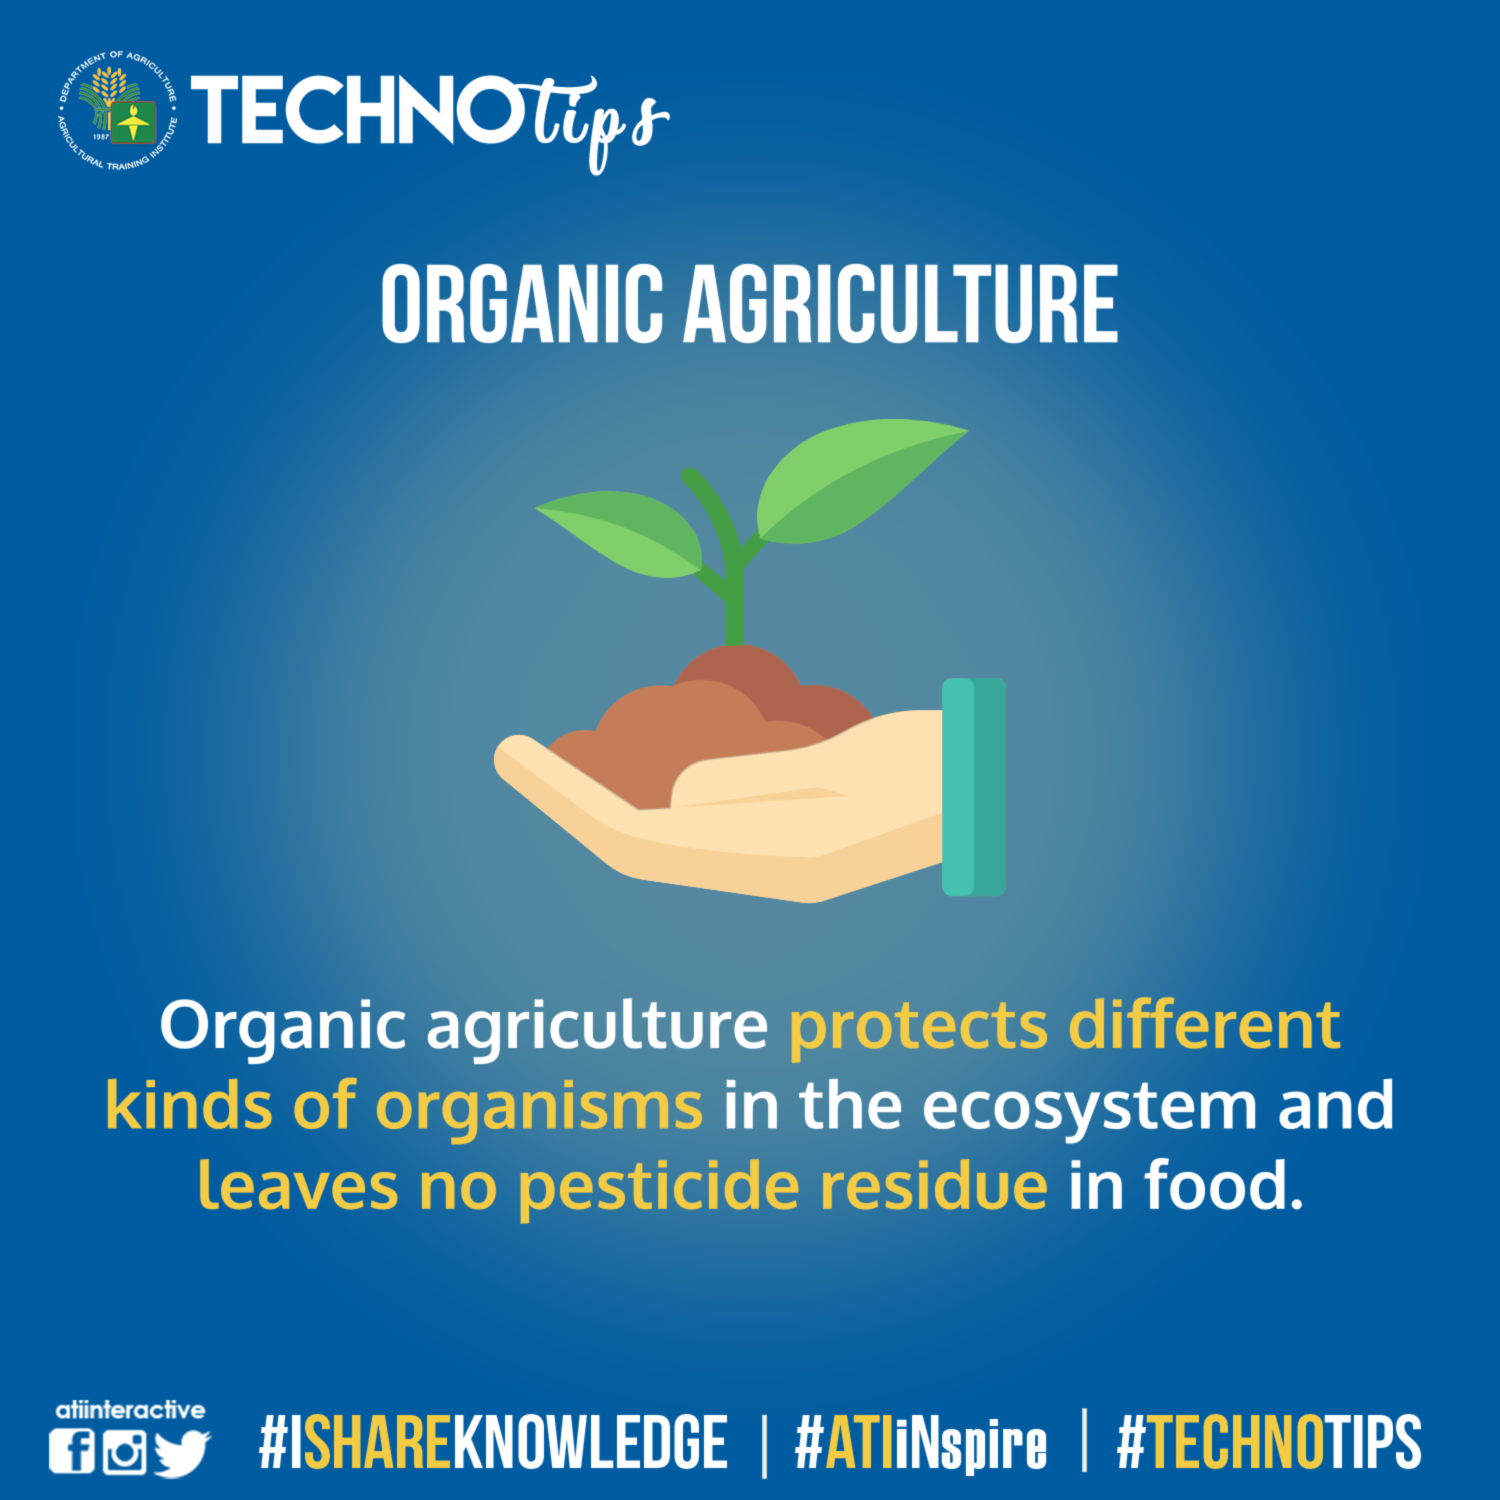 TECHNOTIPS: Organic Agriculture